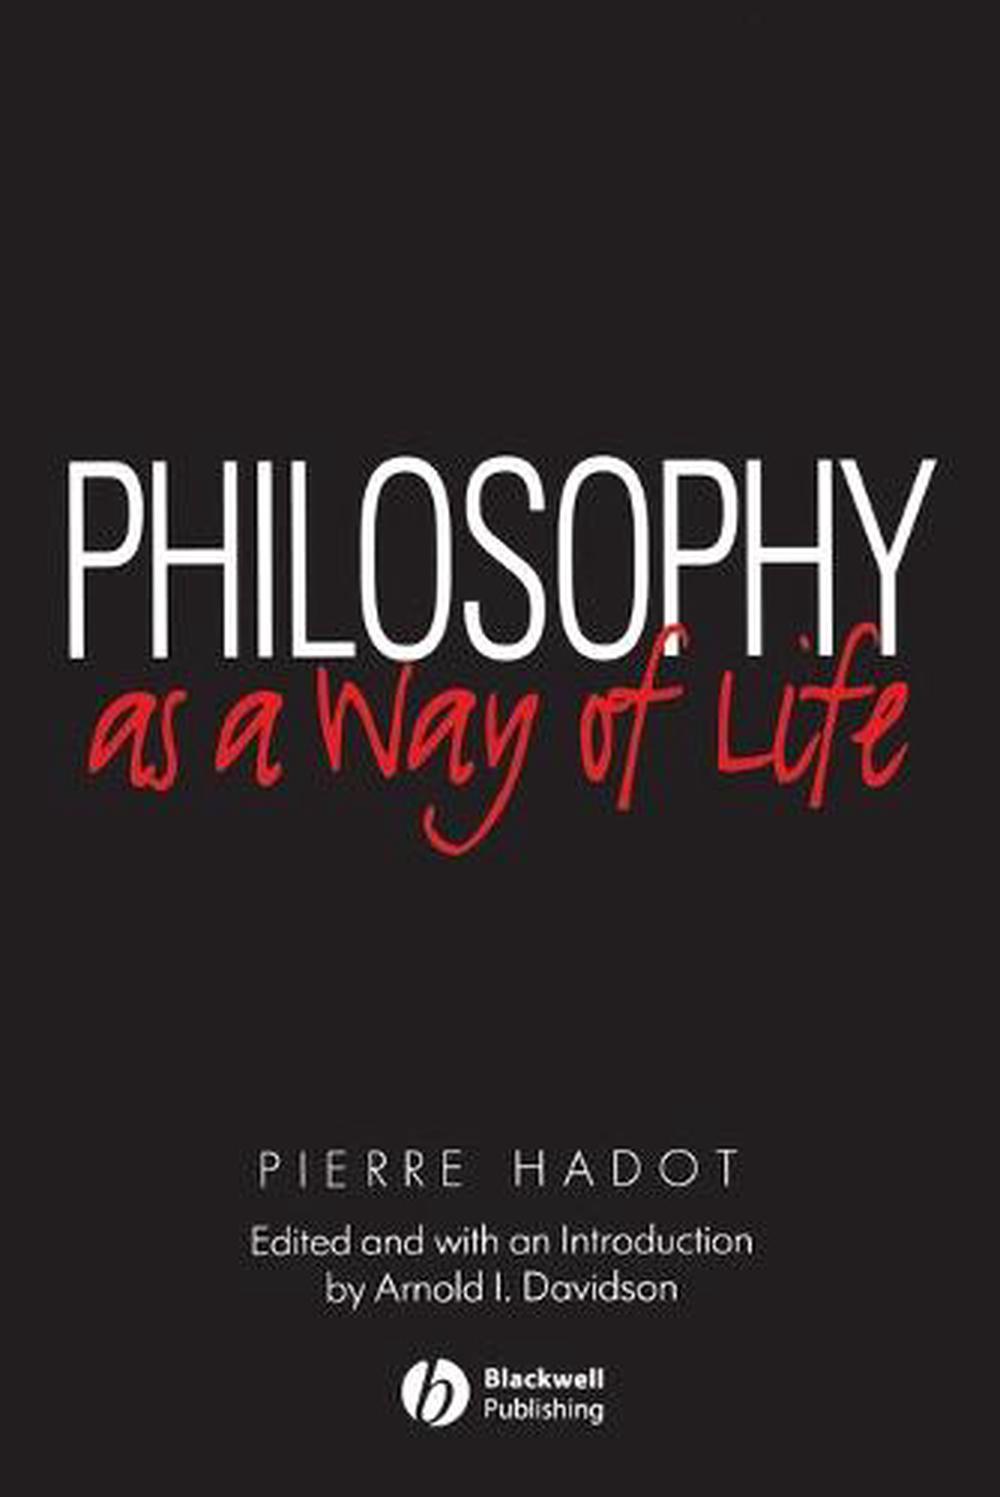 Philosophy as a Way of Life : Spiritual Exercises from Socrates to Foucault ร้านหนังสือและสิ่งของ เป็นร้านหนังสือภาษาอังกฤษหายาก และร้านกาแฟ หรือ บุ๊คคาเฟ่ ตั้งอยู่สุขุมวิท กรุงเทพ